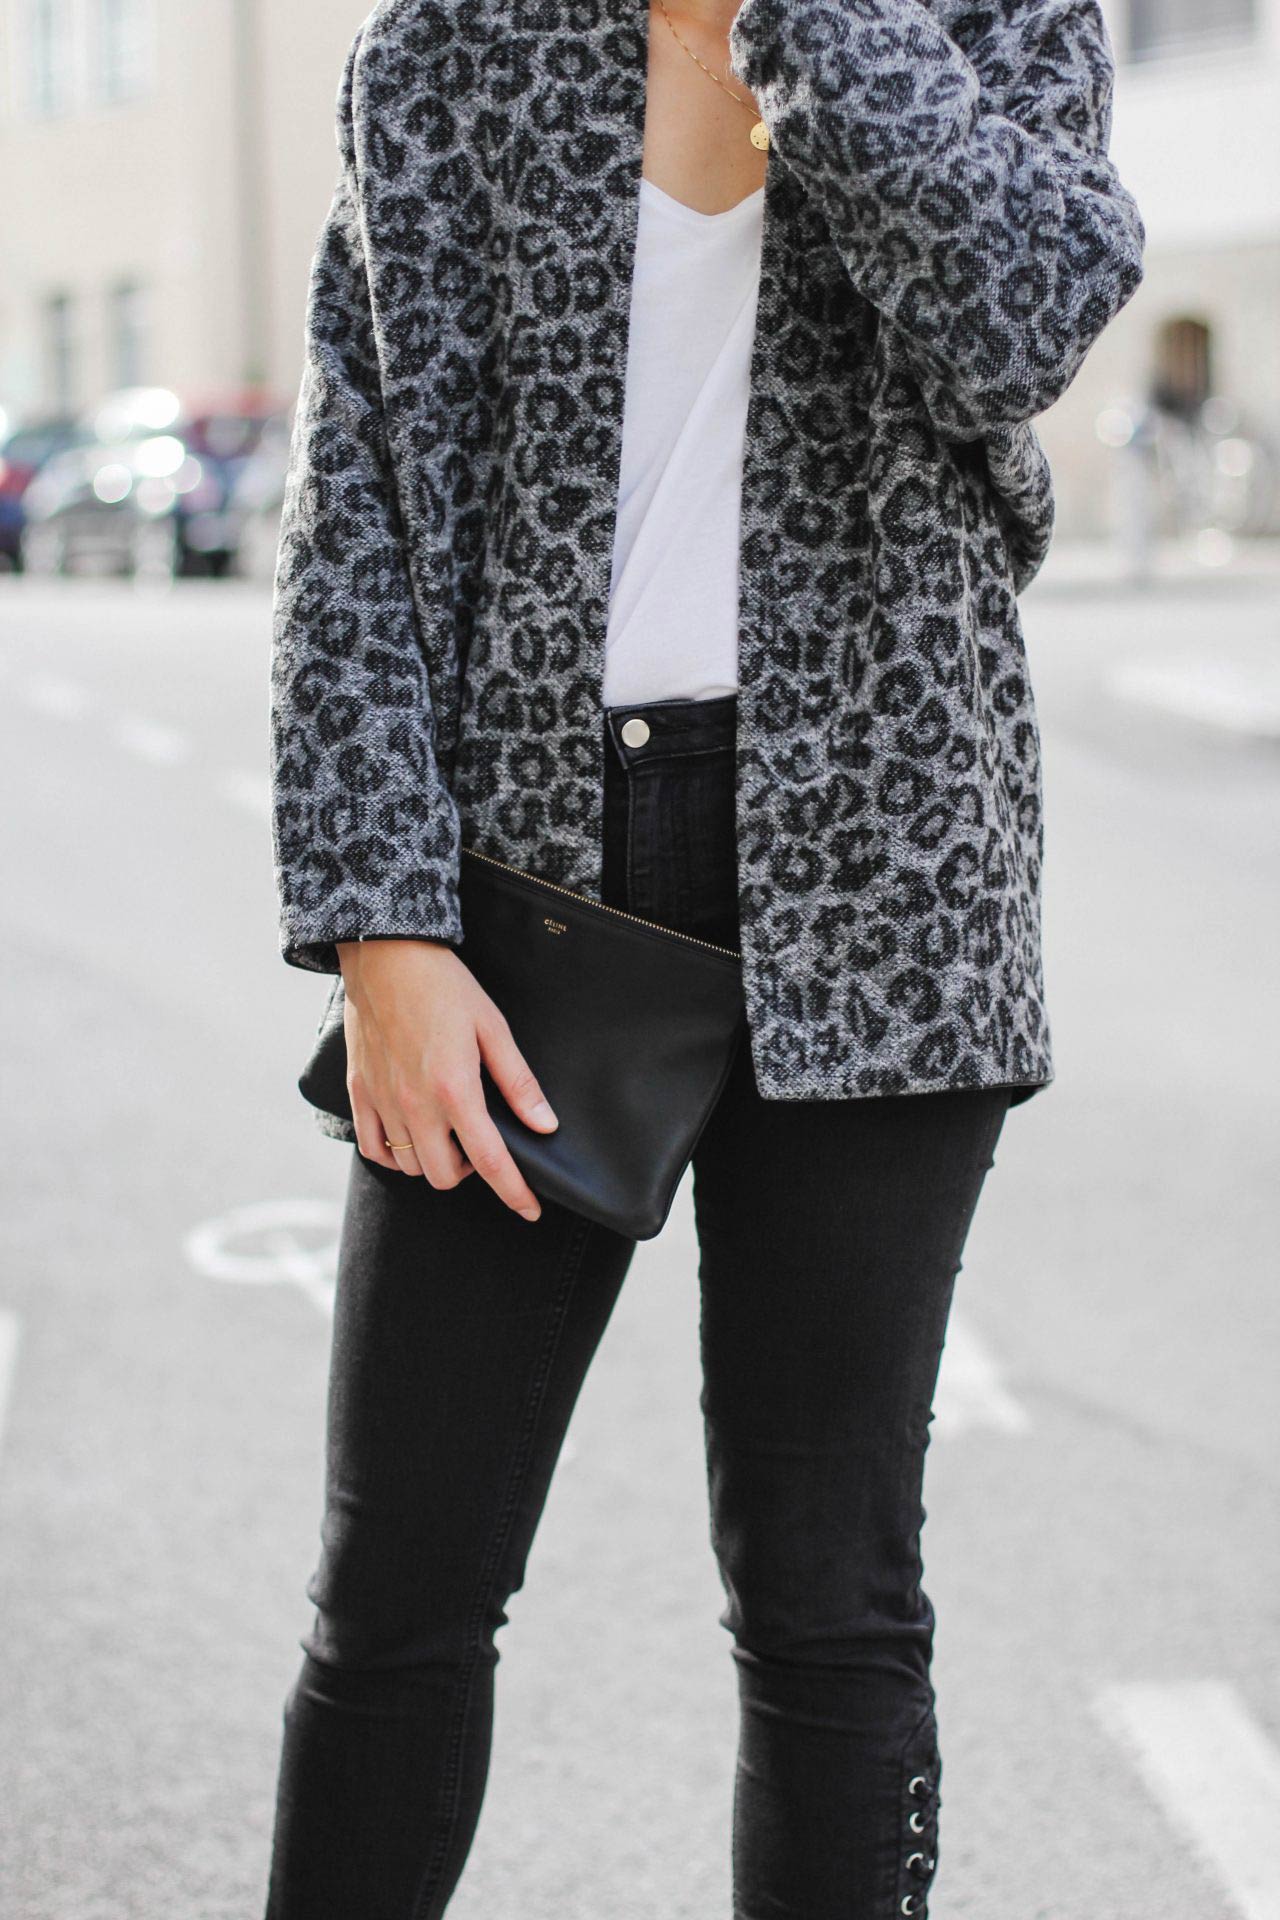 Streetstyle: The leo coat and Black Friday shopping